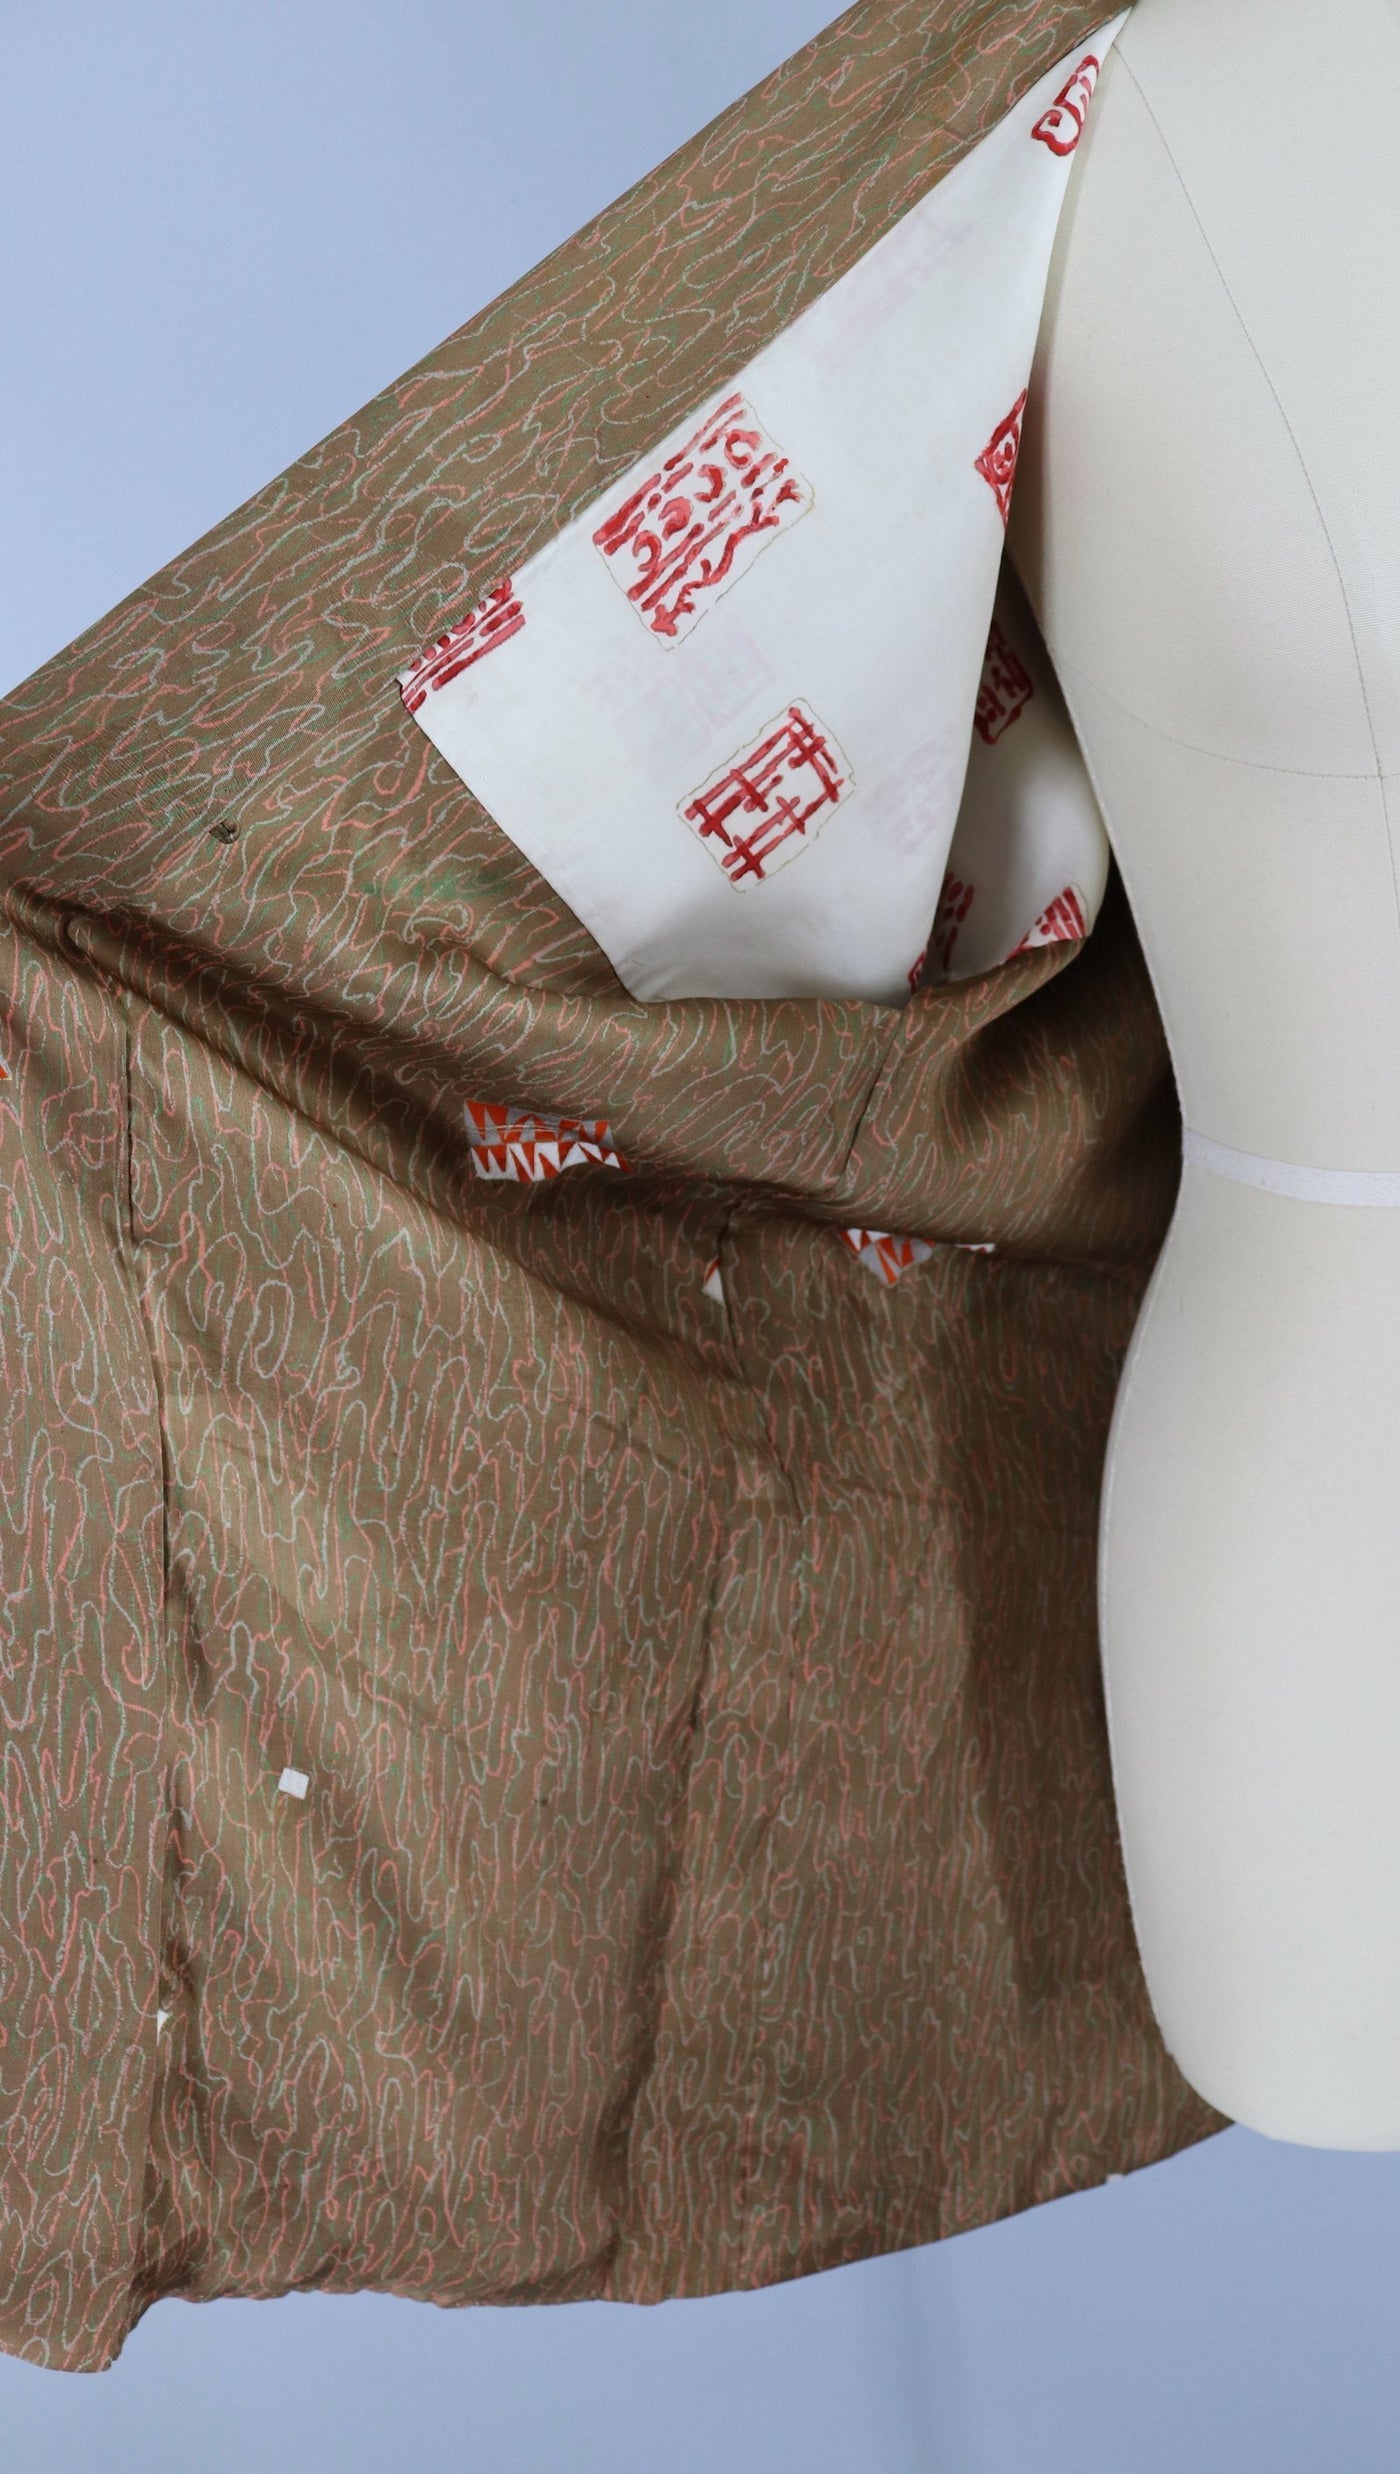 Vintage 1940s Silk Haori Kimono Cardigan Jacket / Art Deco Tan & Peach Abstract - ThisBlueBird